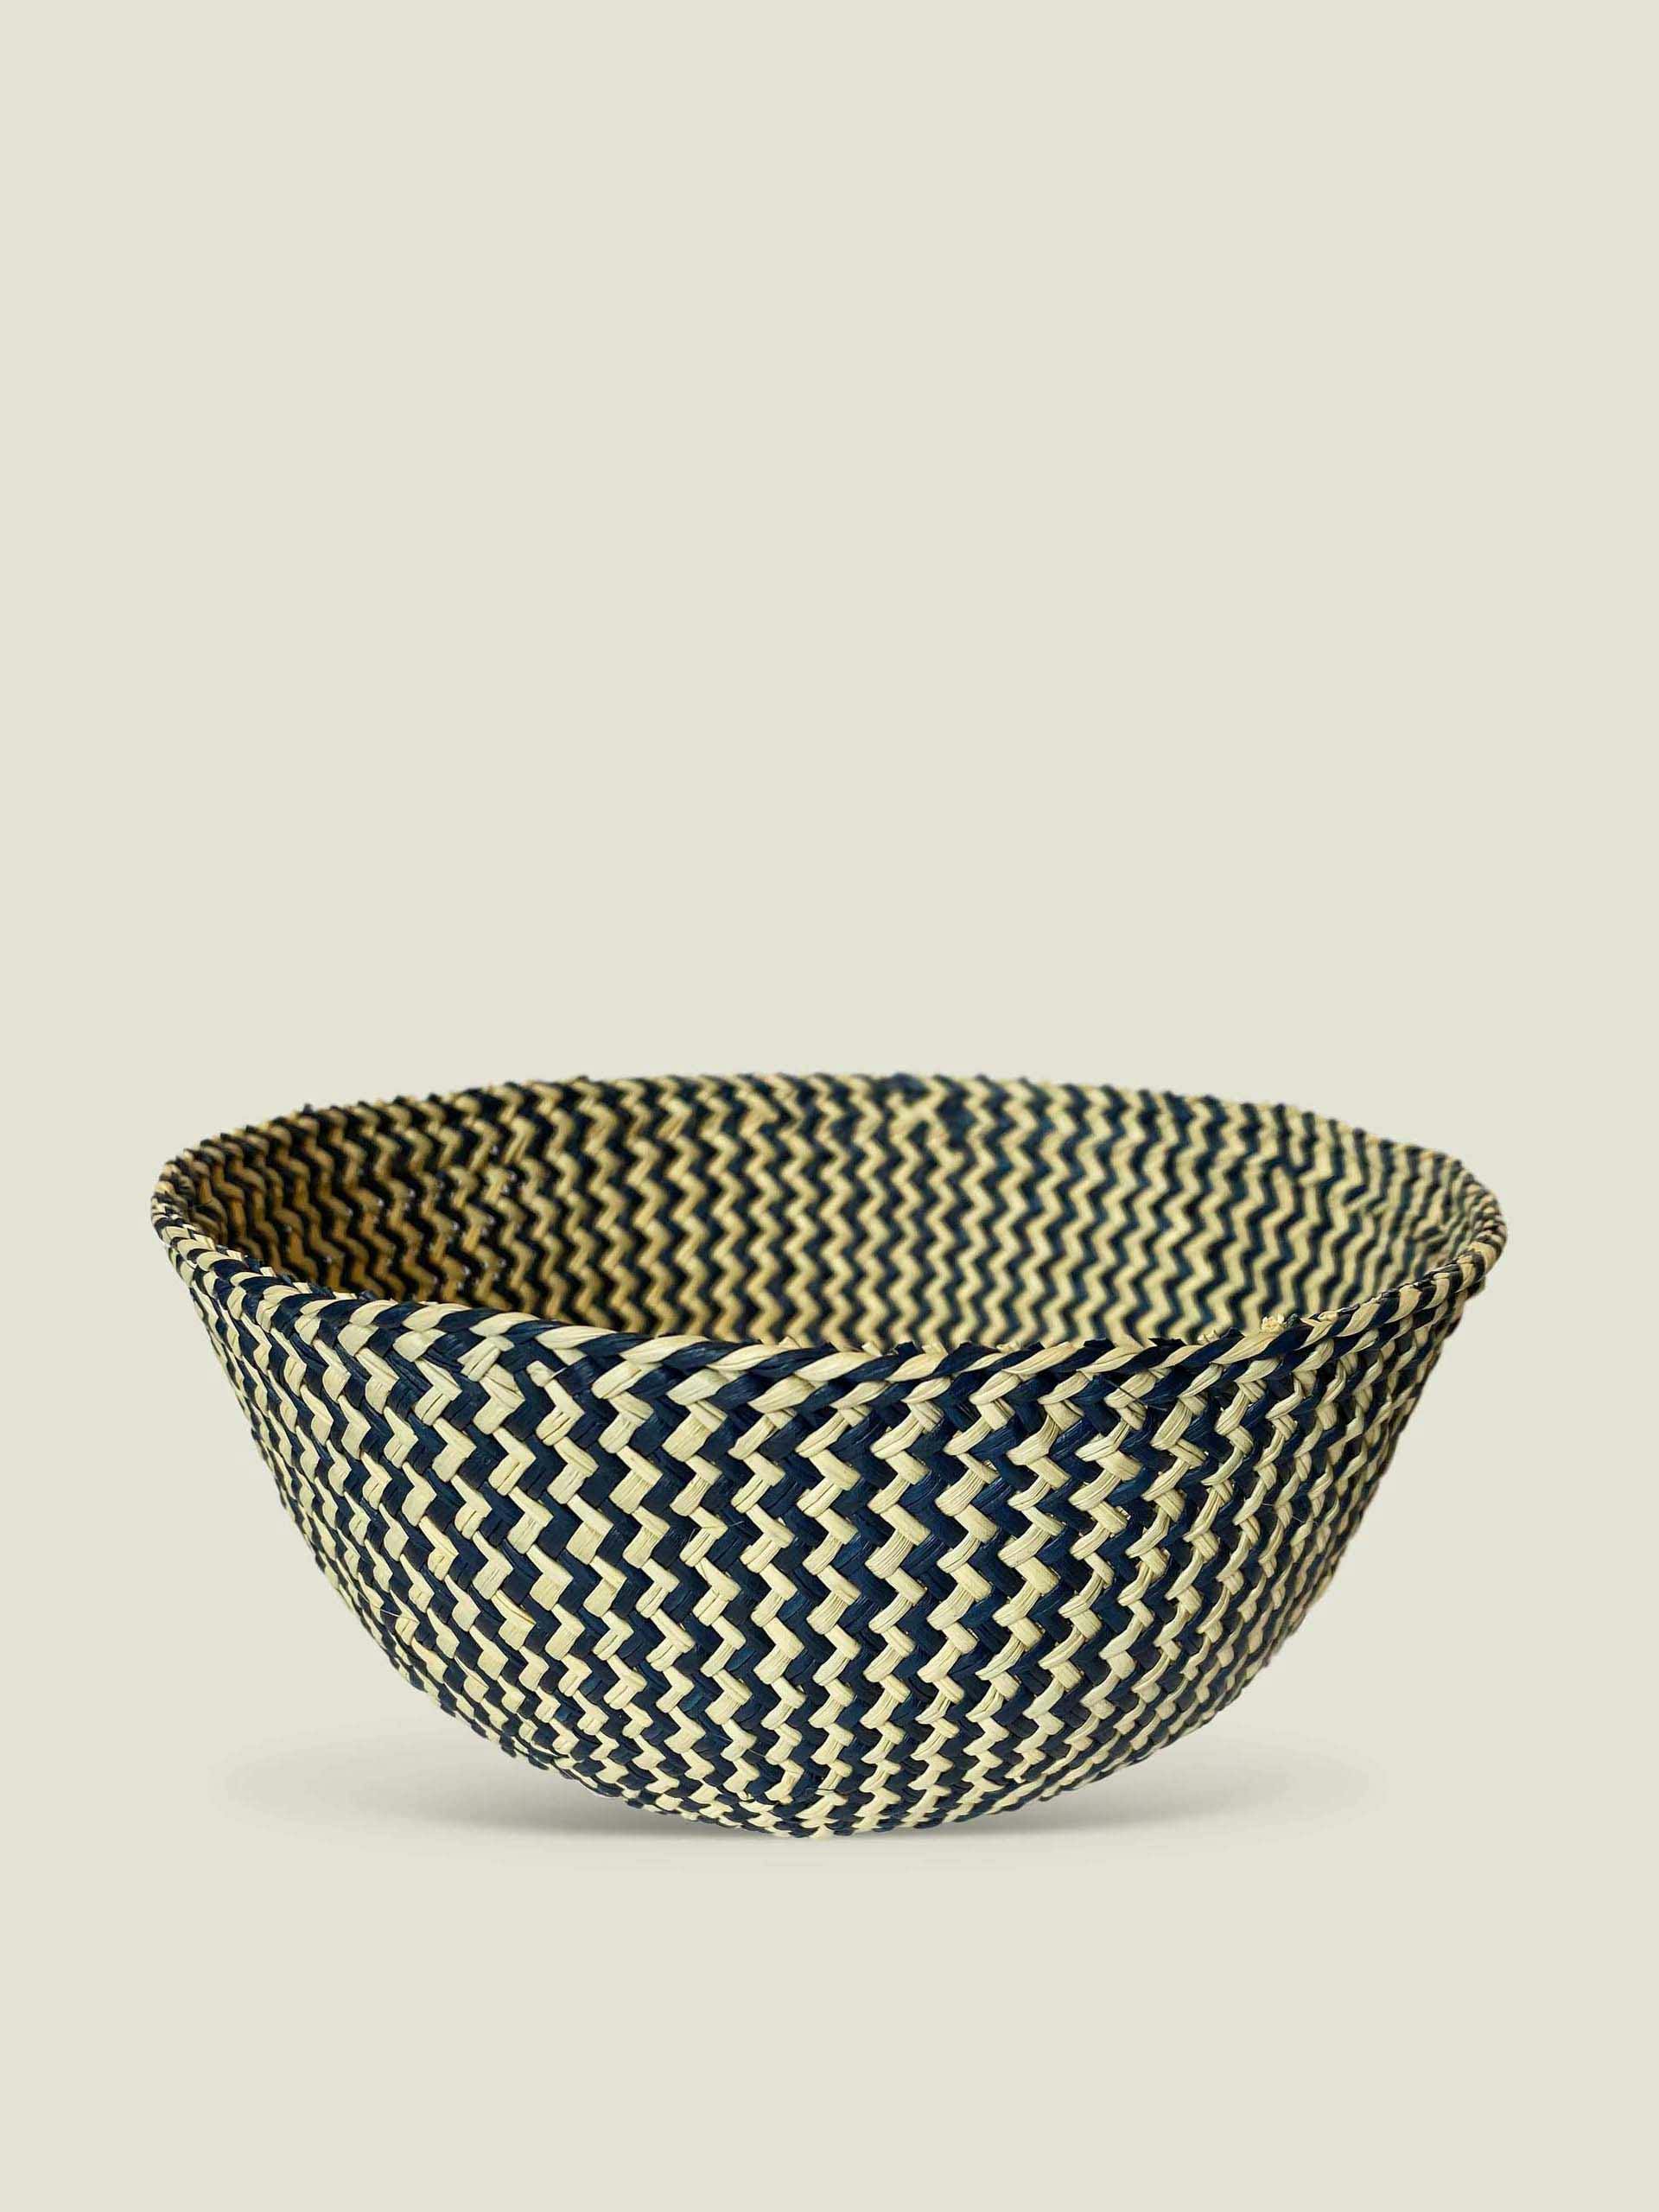 Narino woven bowl